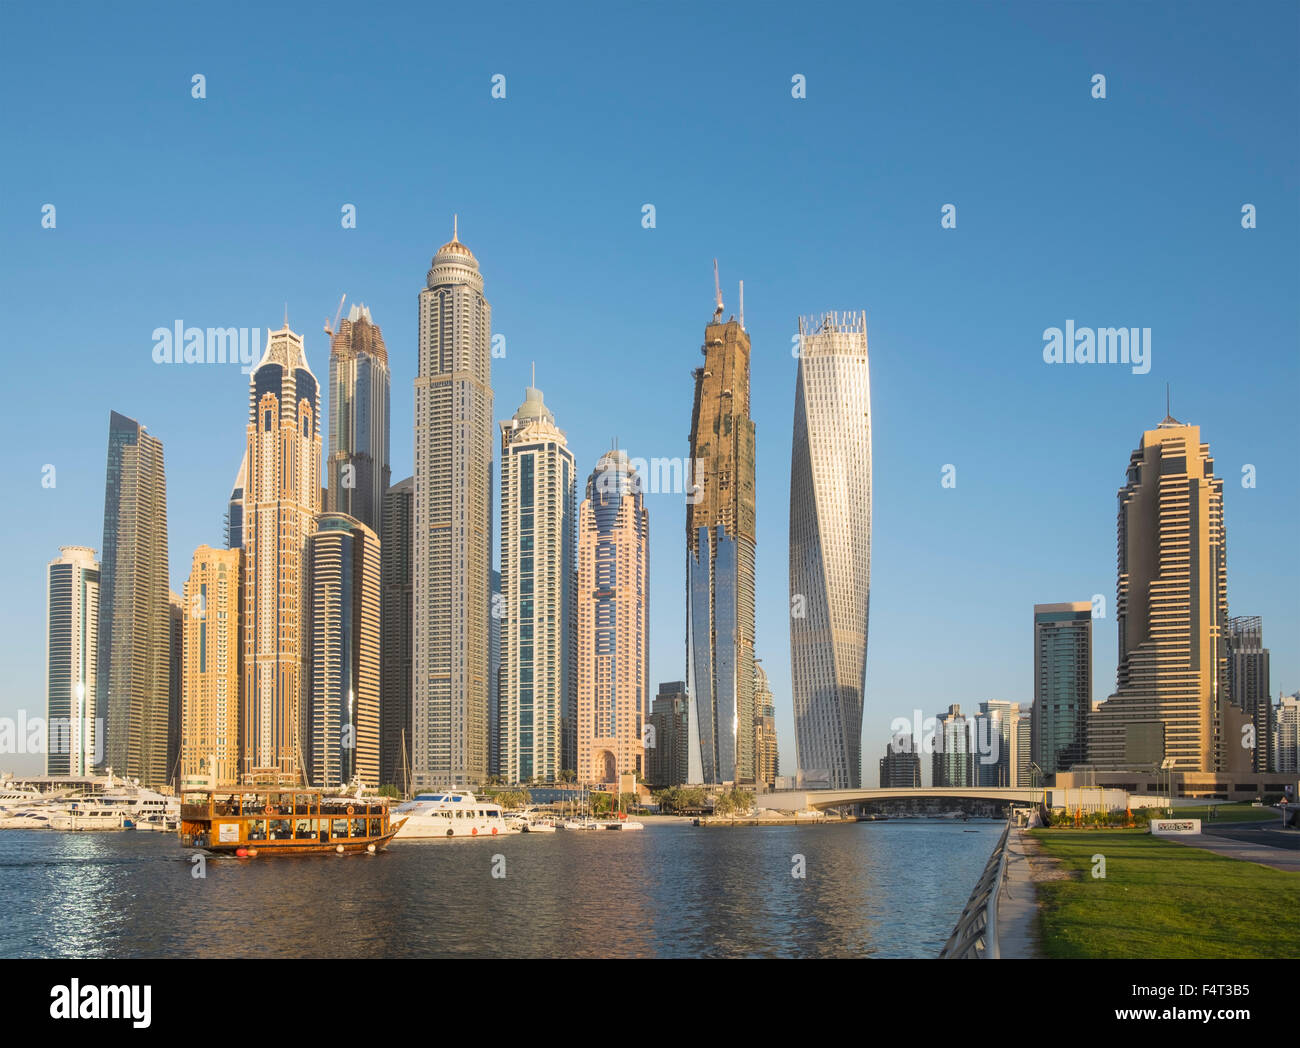 Skyline of skyscrapers  at Marina district of Dubai United Arab Emirates Stock Photo